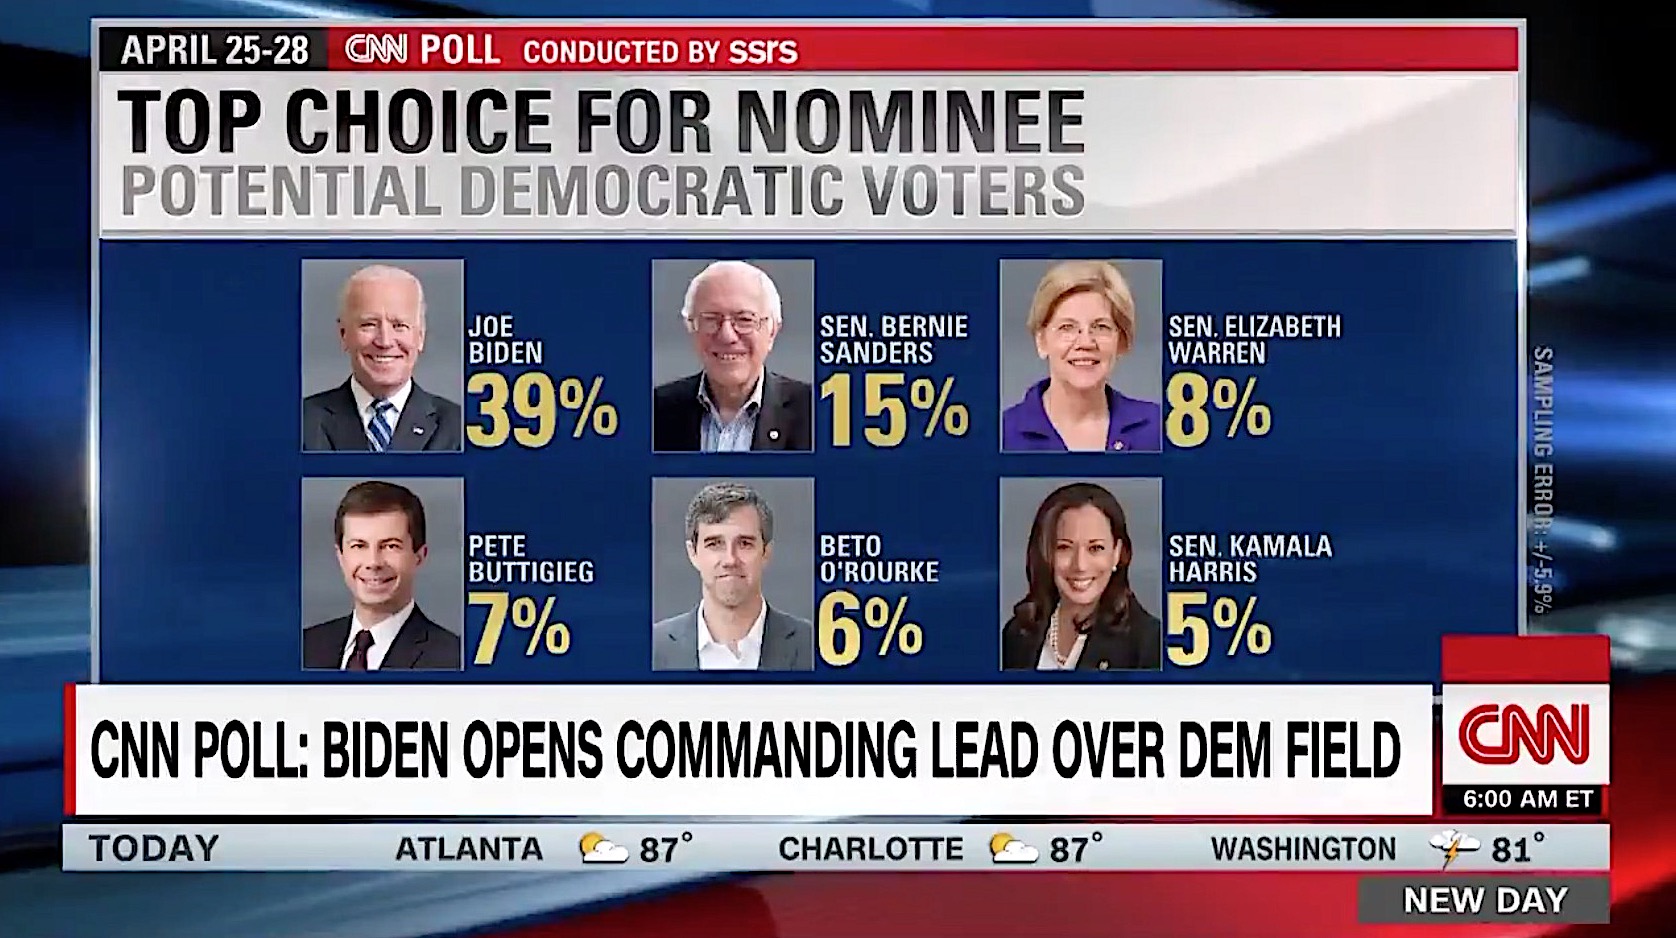 Joe Biden takes the lead in new poll